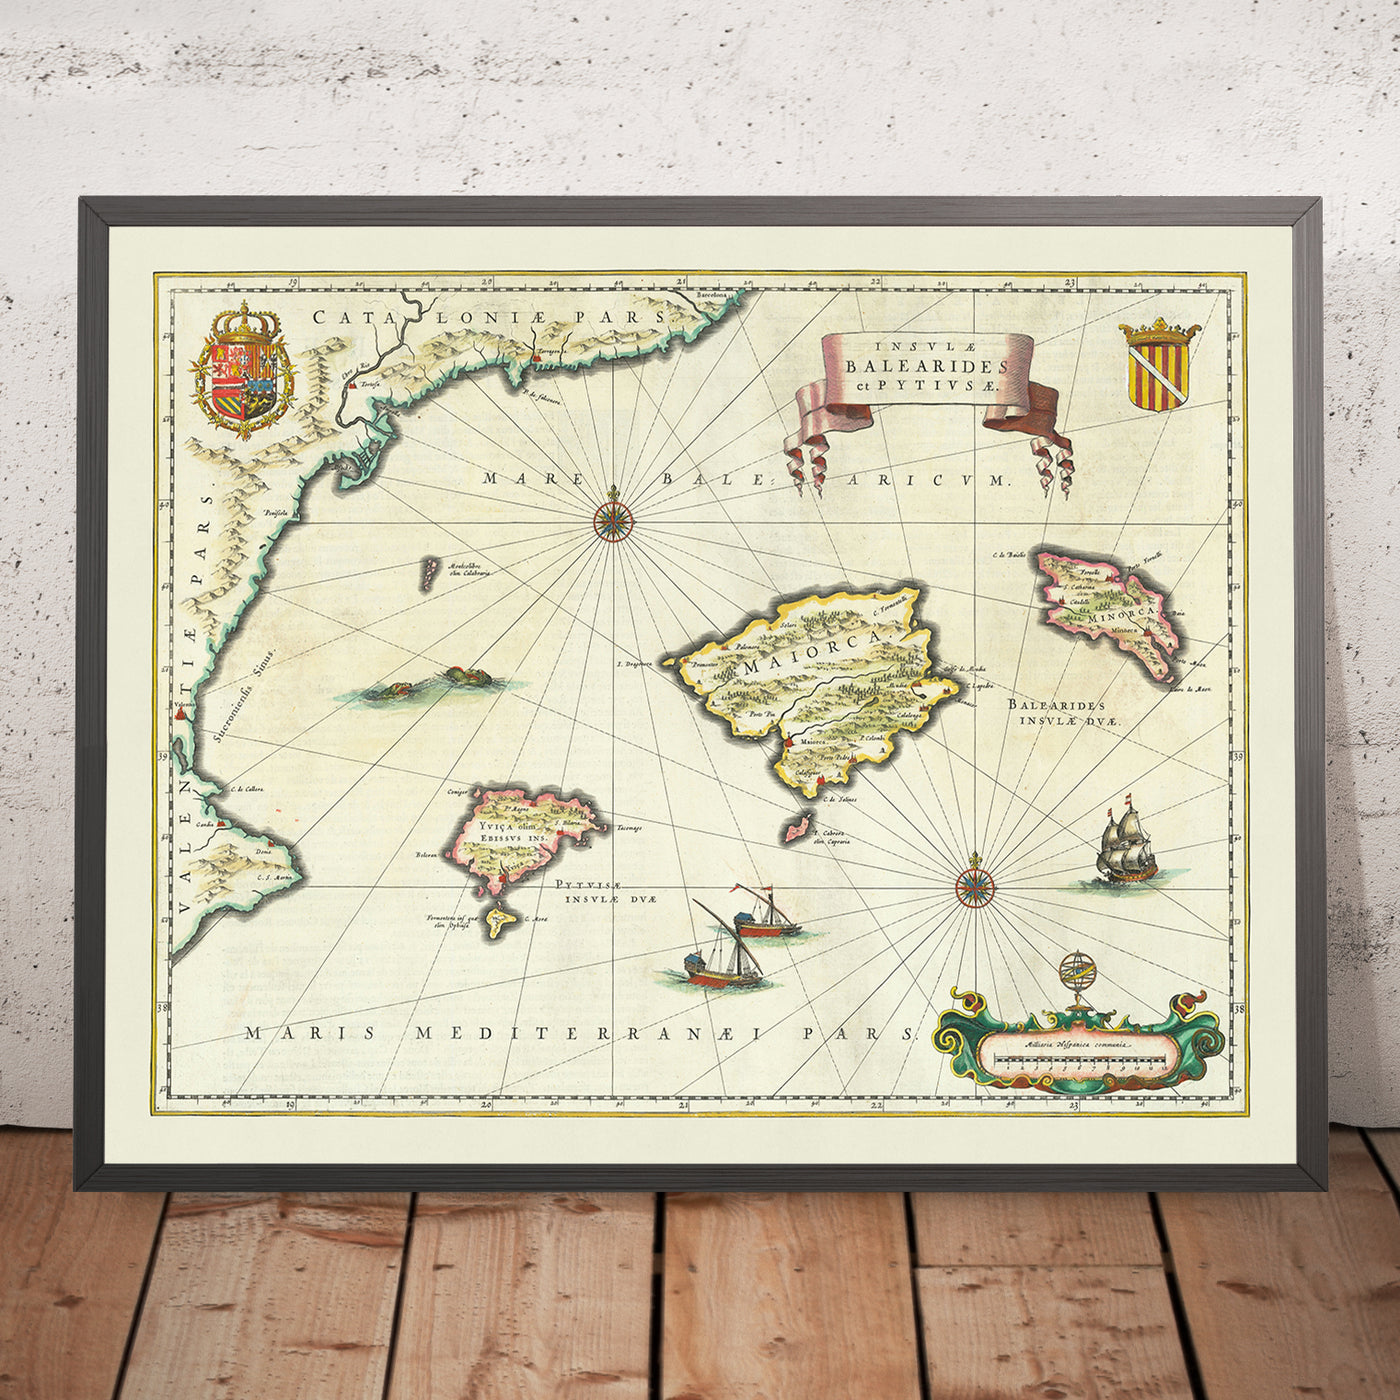 Ancienne carte des îles Baléares, 1640 : Majorque, Minorque, Ibiza, littoral catalan, monstres marins